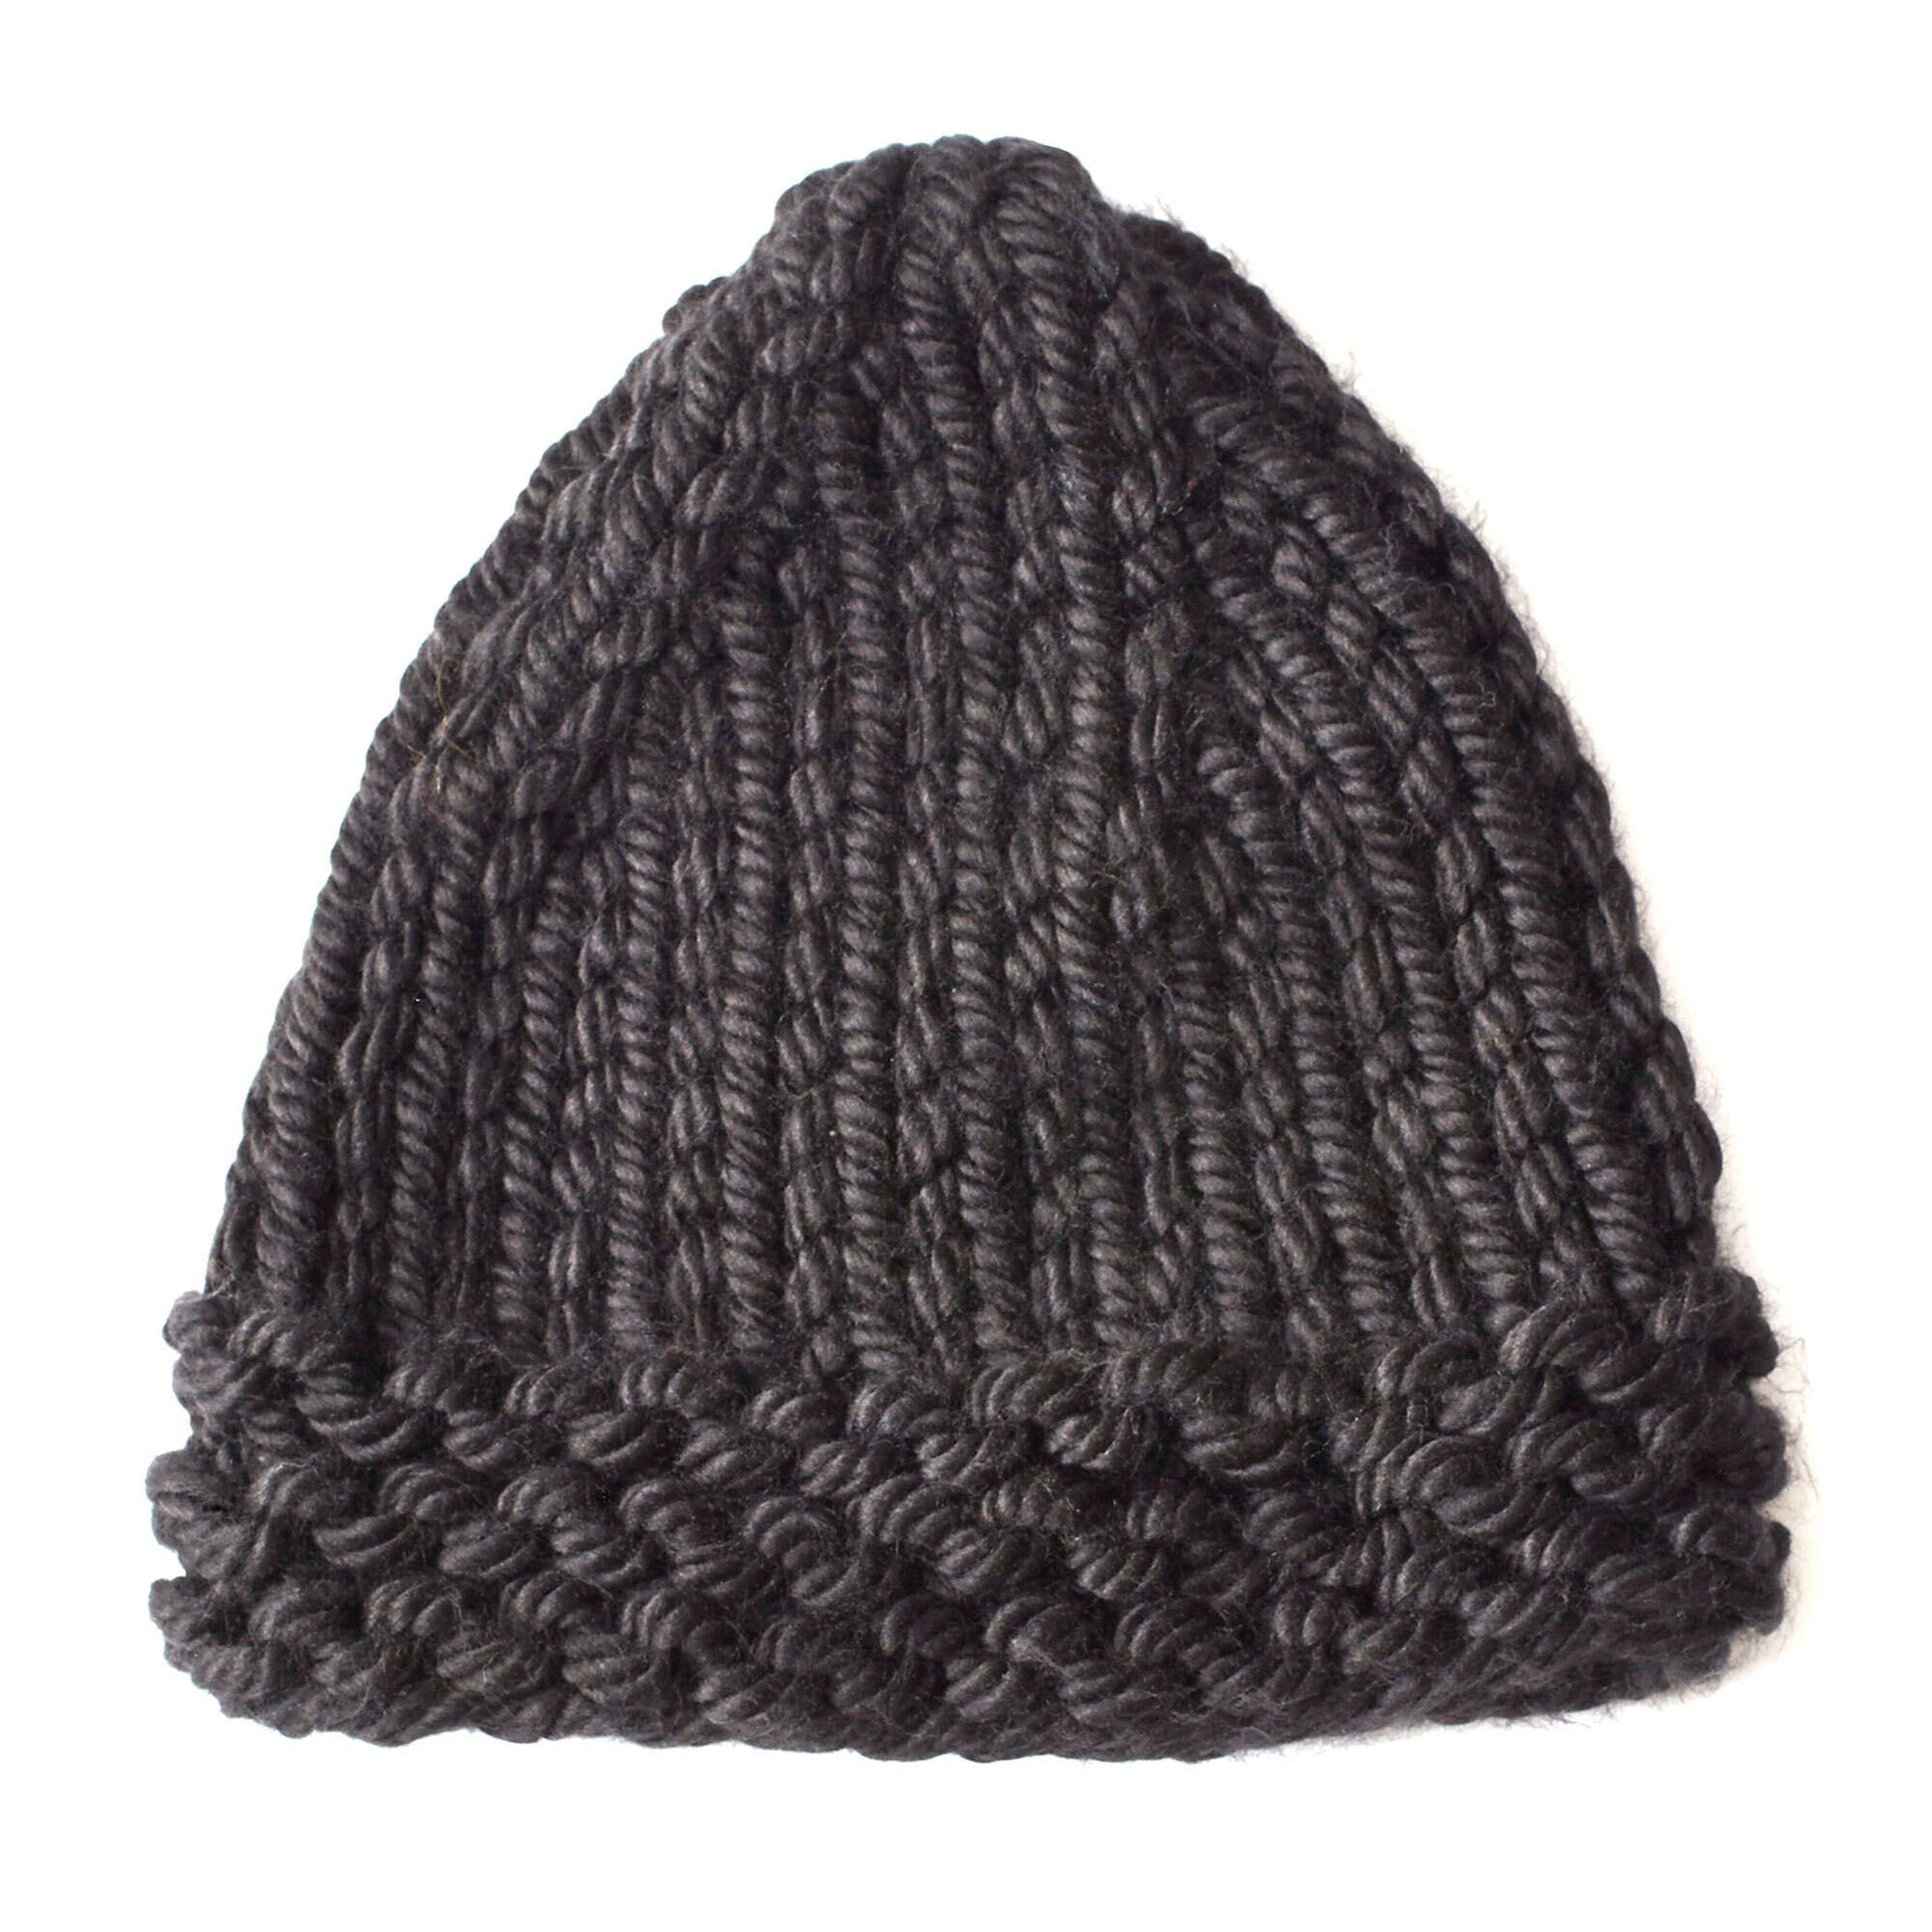 Bernat Acorn Hat Knit Hat made in Bernat Mega Bulky yarn